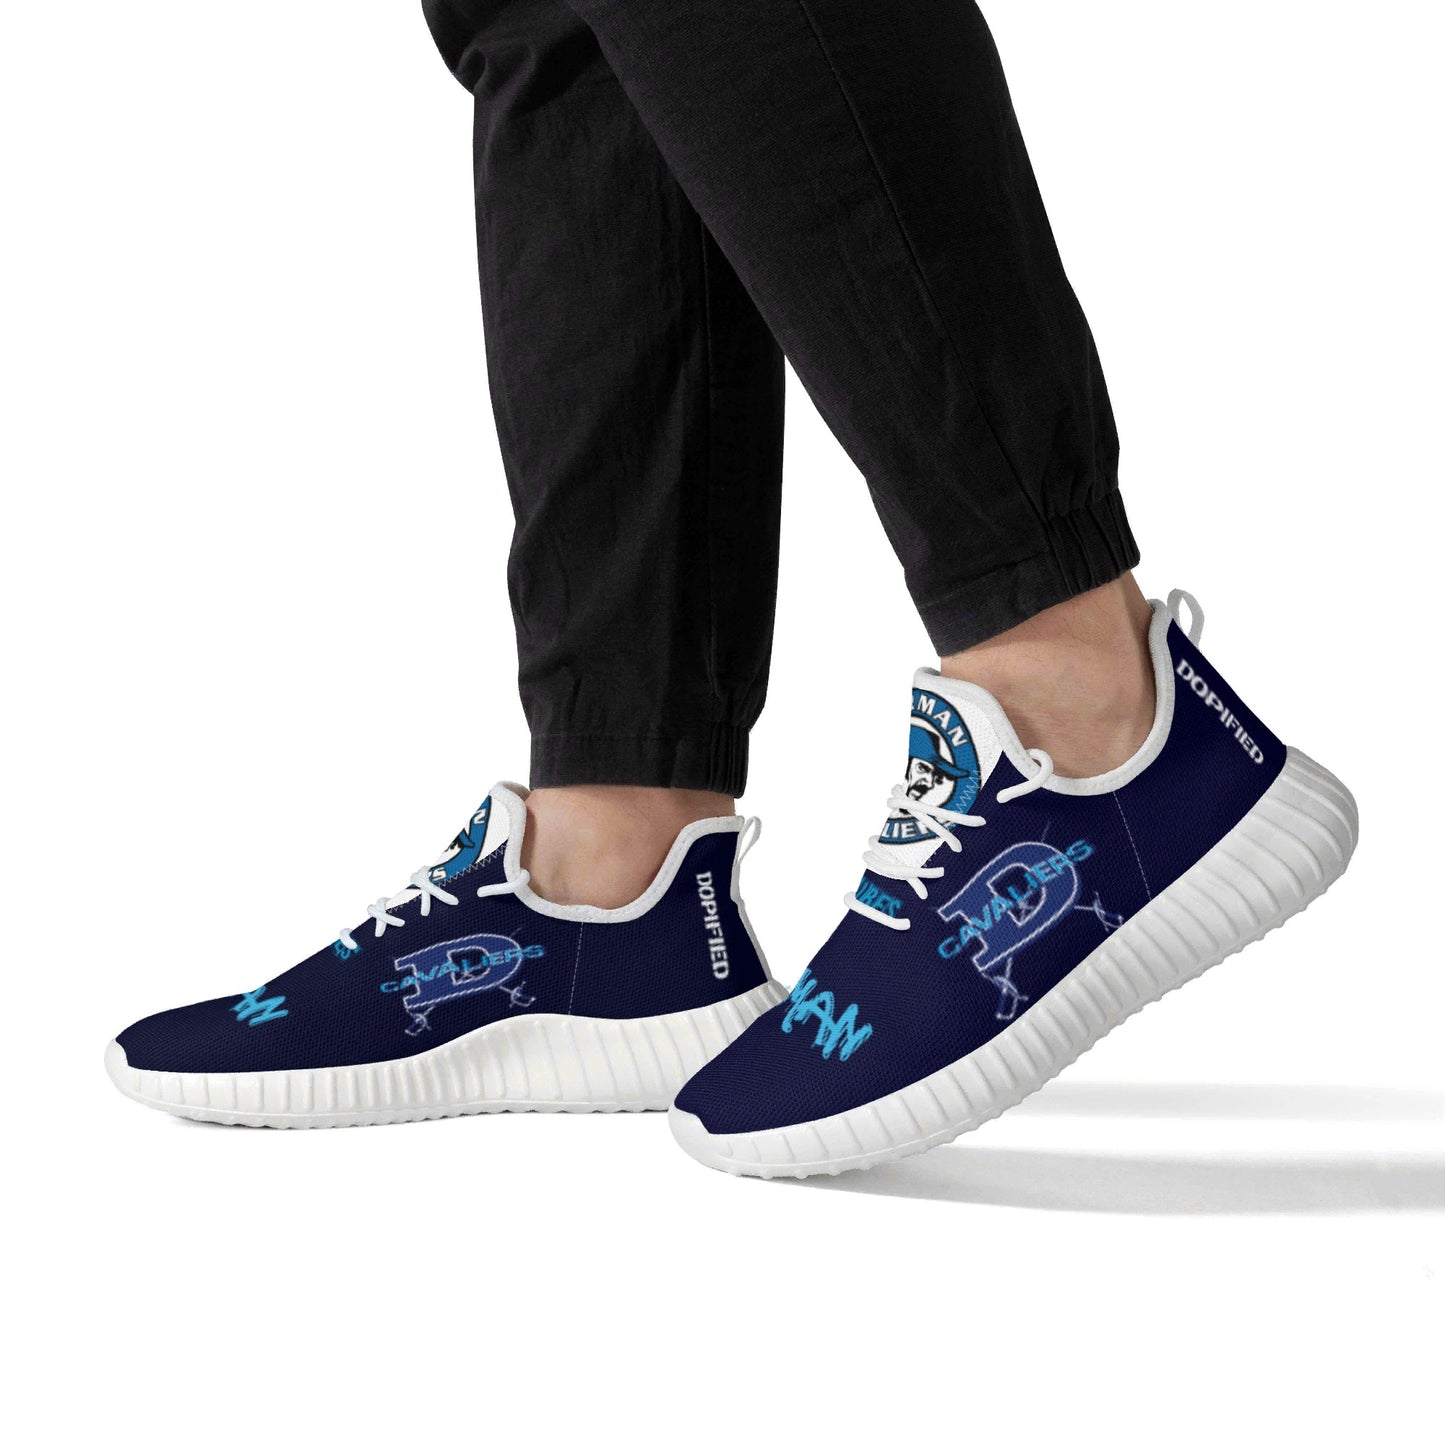 "DORMAN Cavs ViBes" Men's Mesh Knit Sneakers